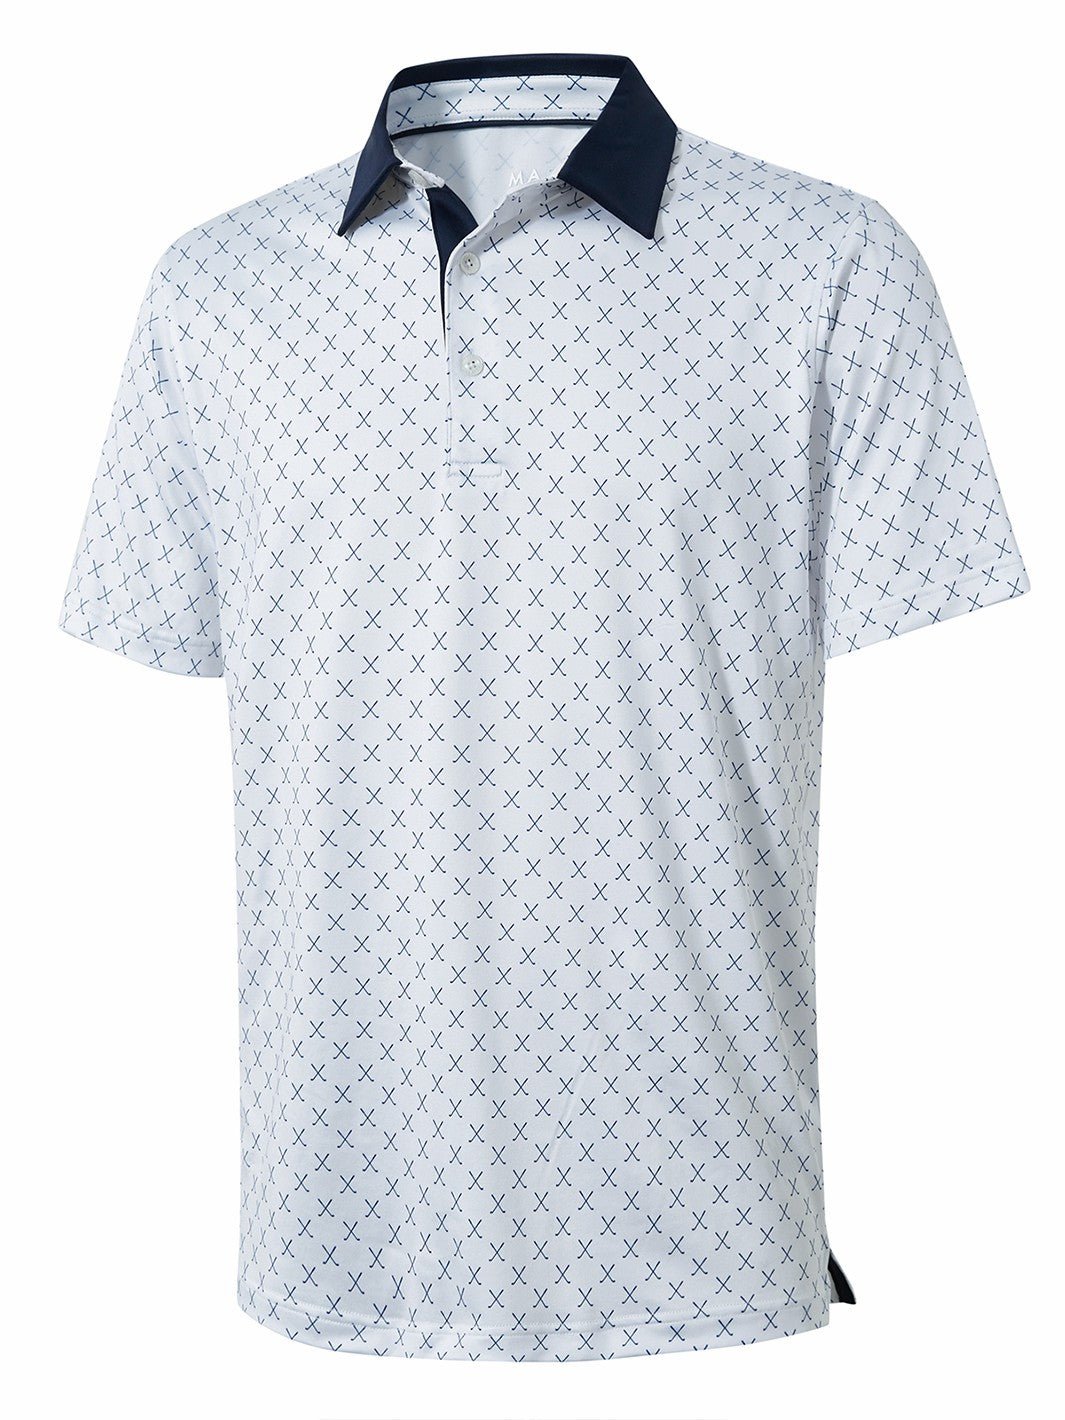 Geometric graphic print golf shirt Men's White Golf Polo (White